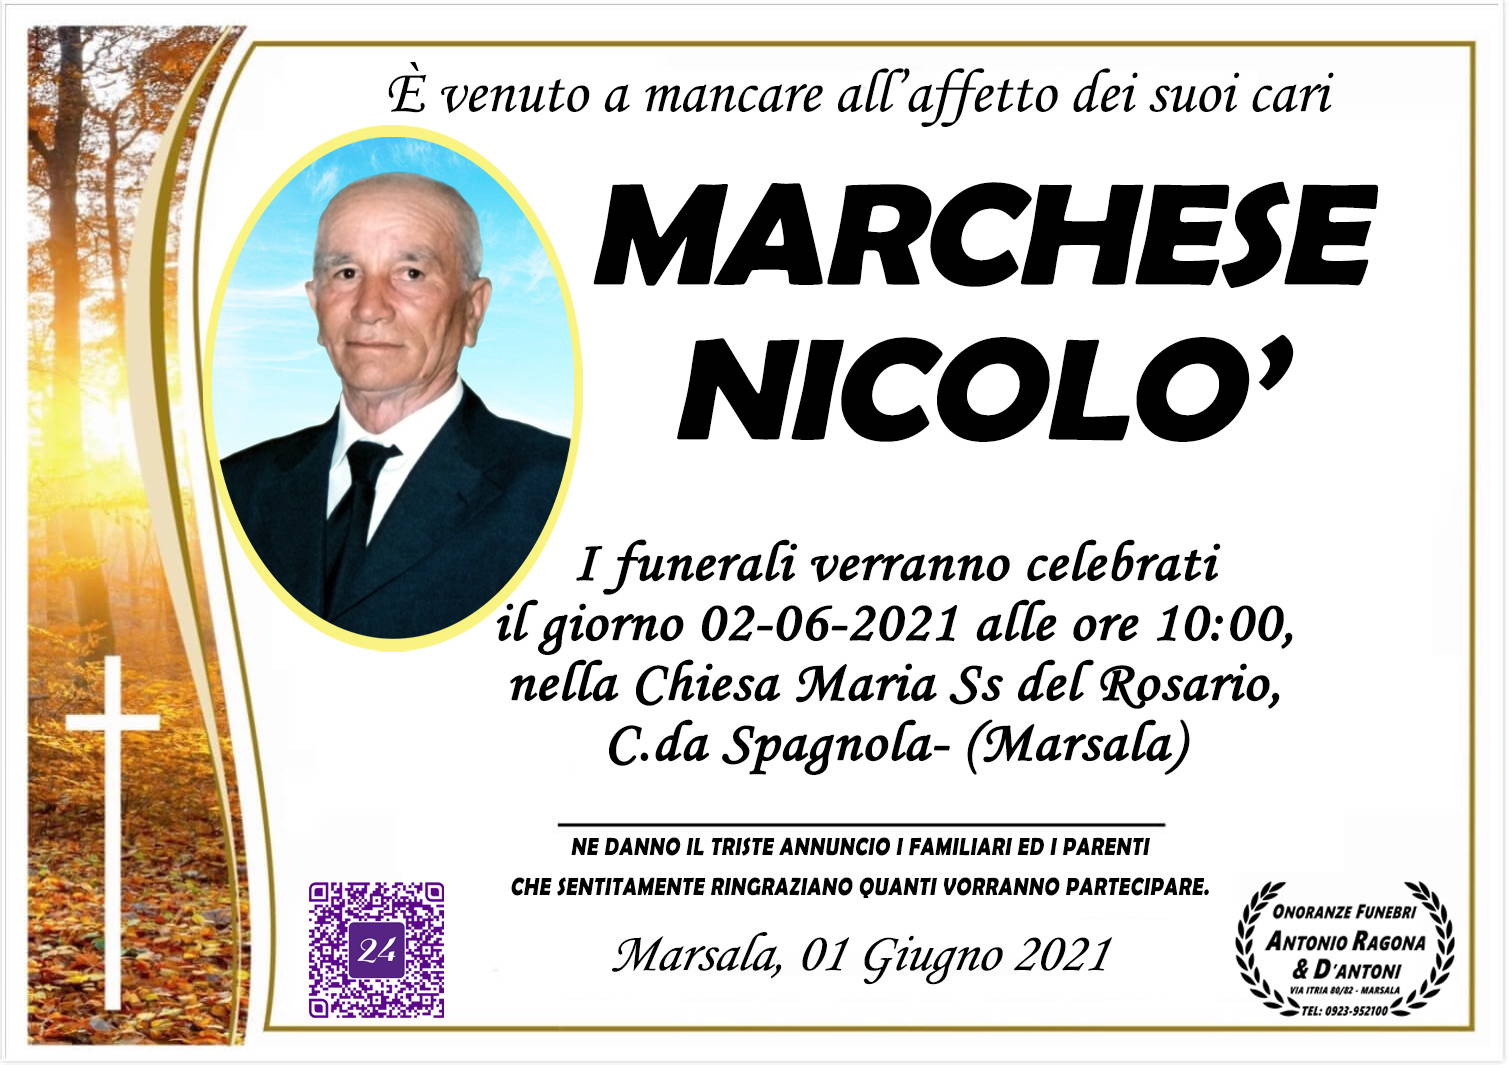 Nicolò Marchese